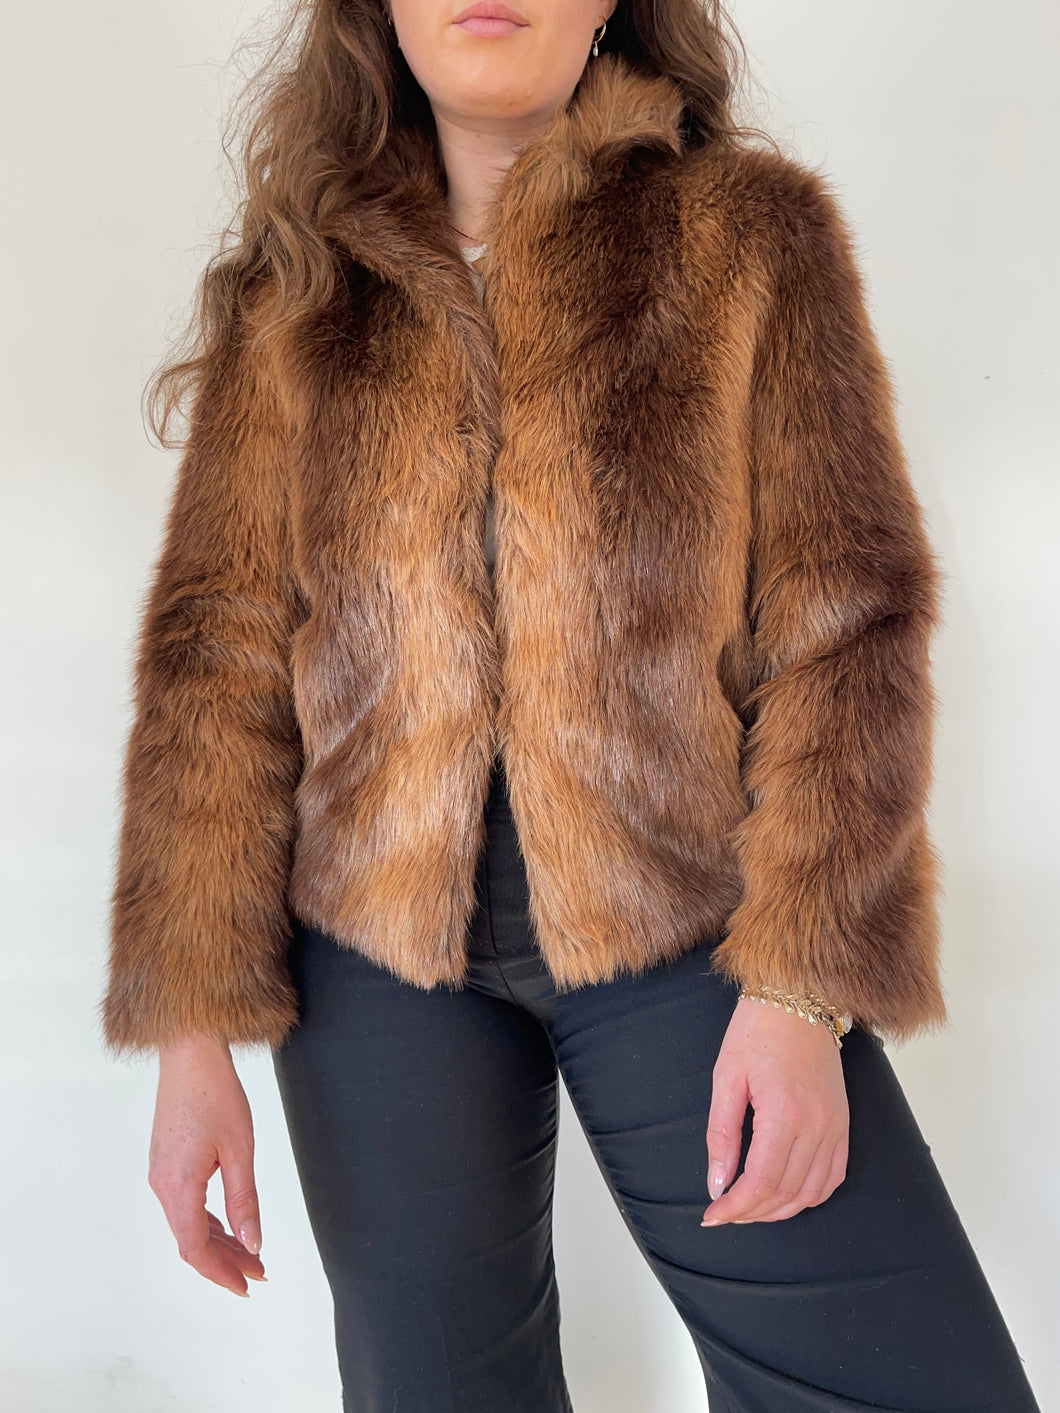 Vintage Faux Fur Jacket Made in Aus (M)